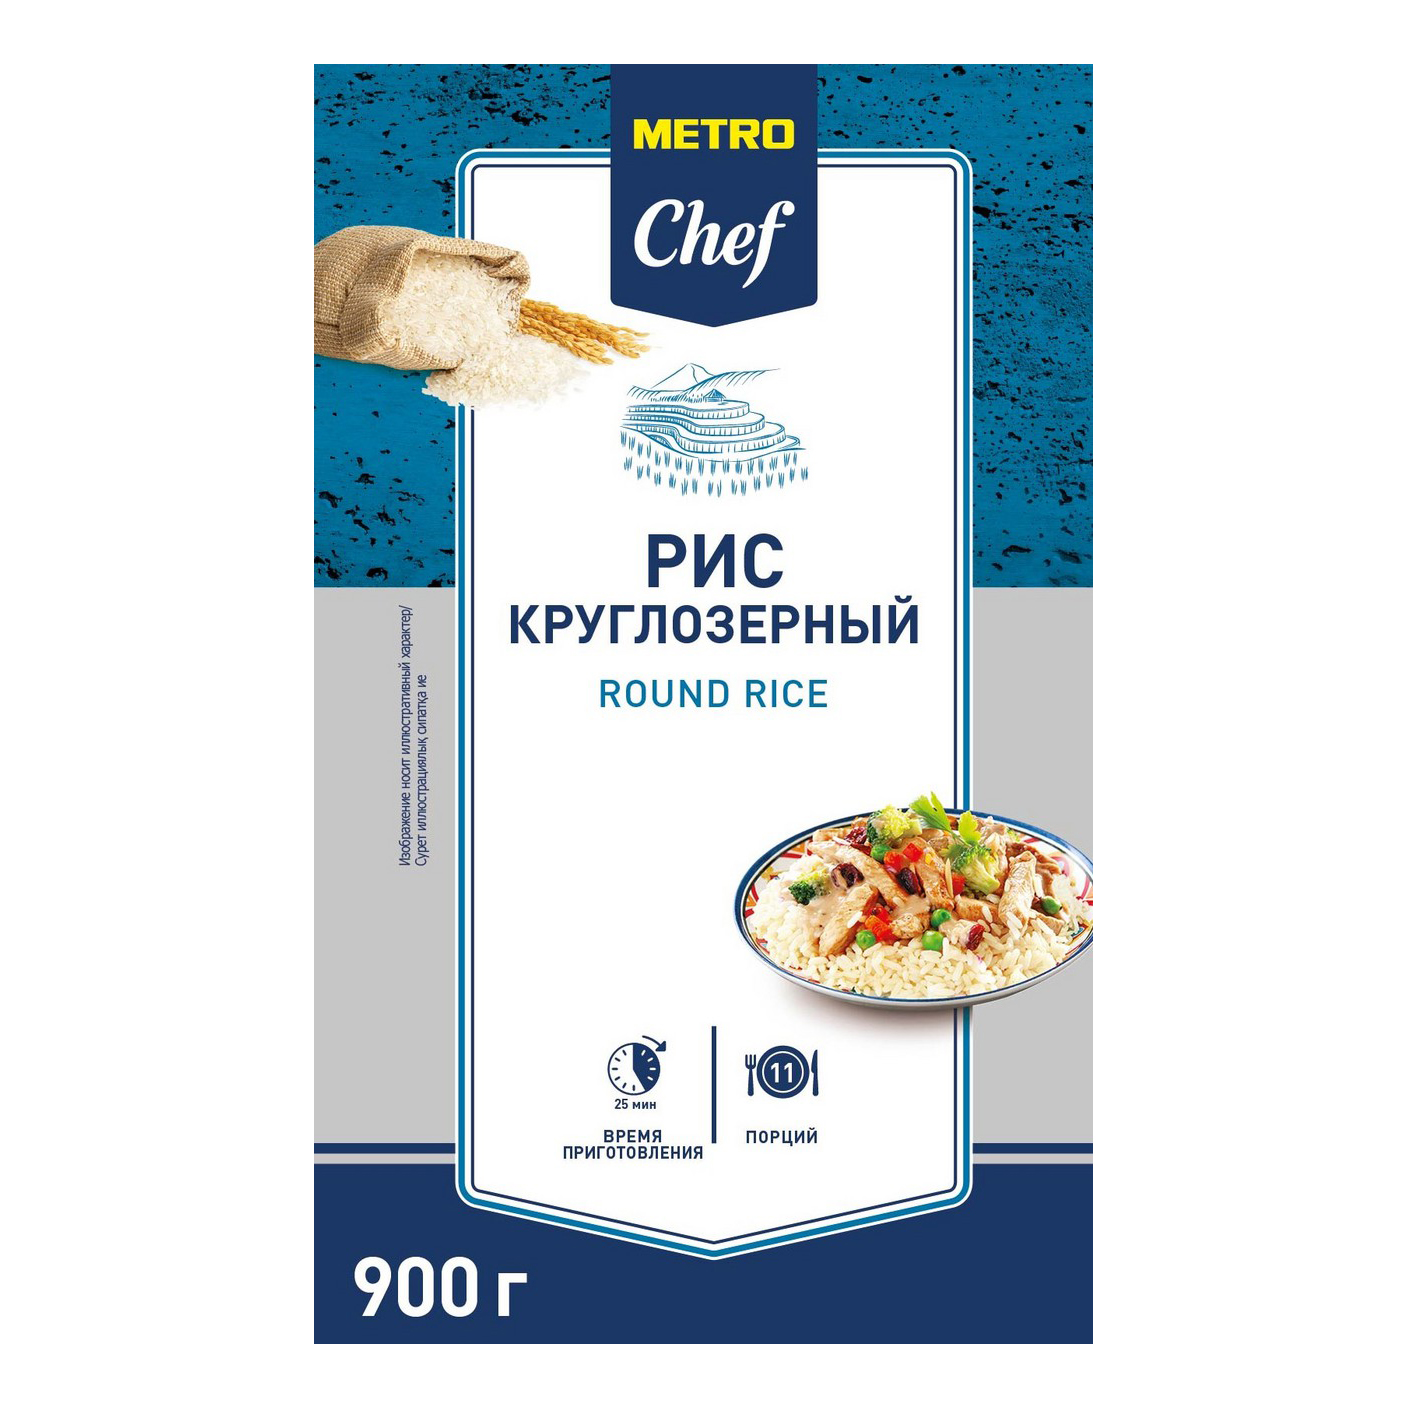 Рис Metro Chef круглозерный 900 г